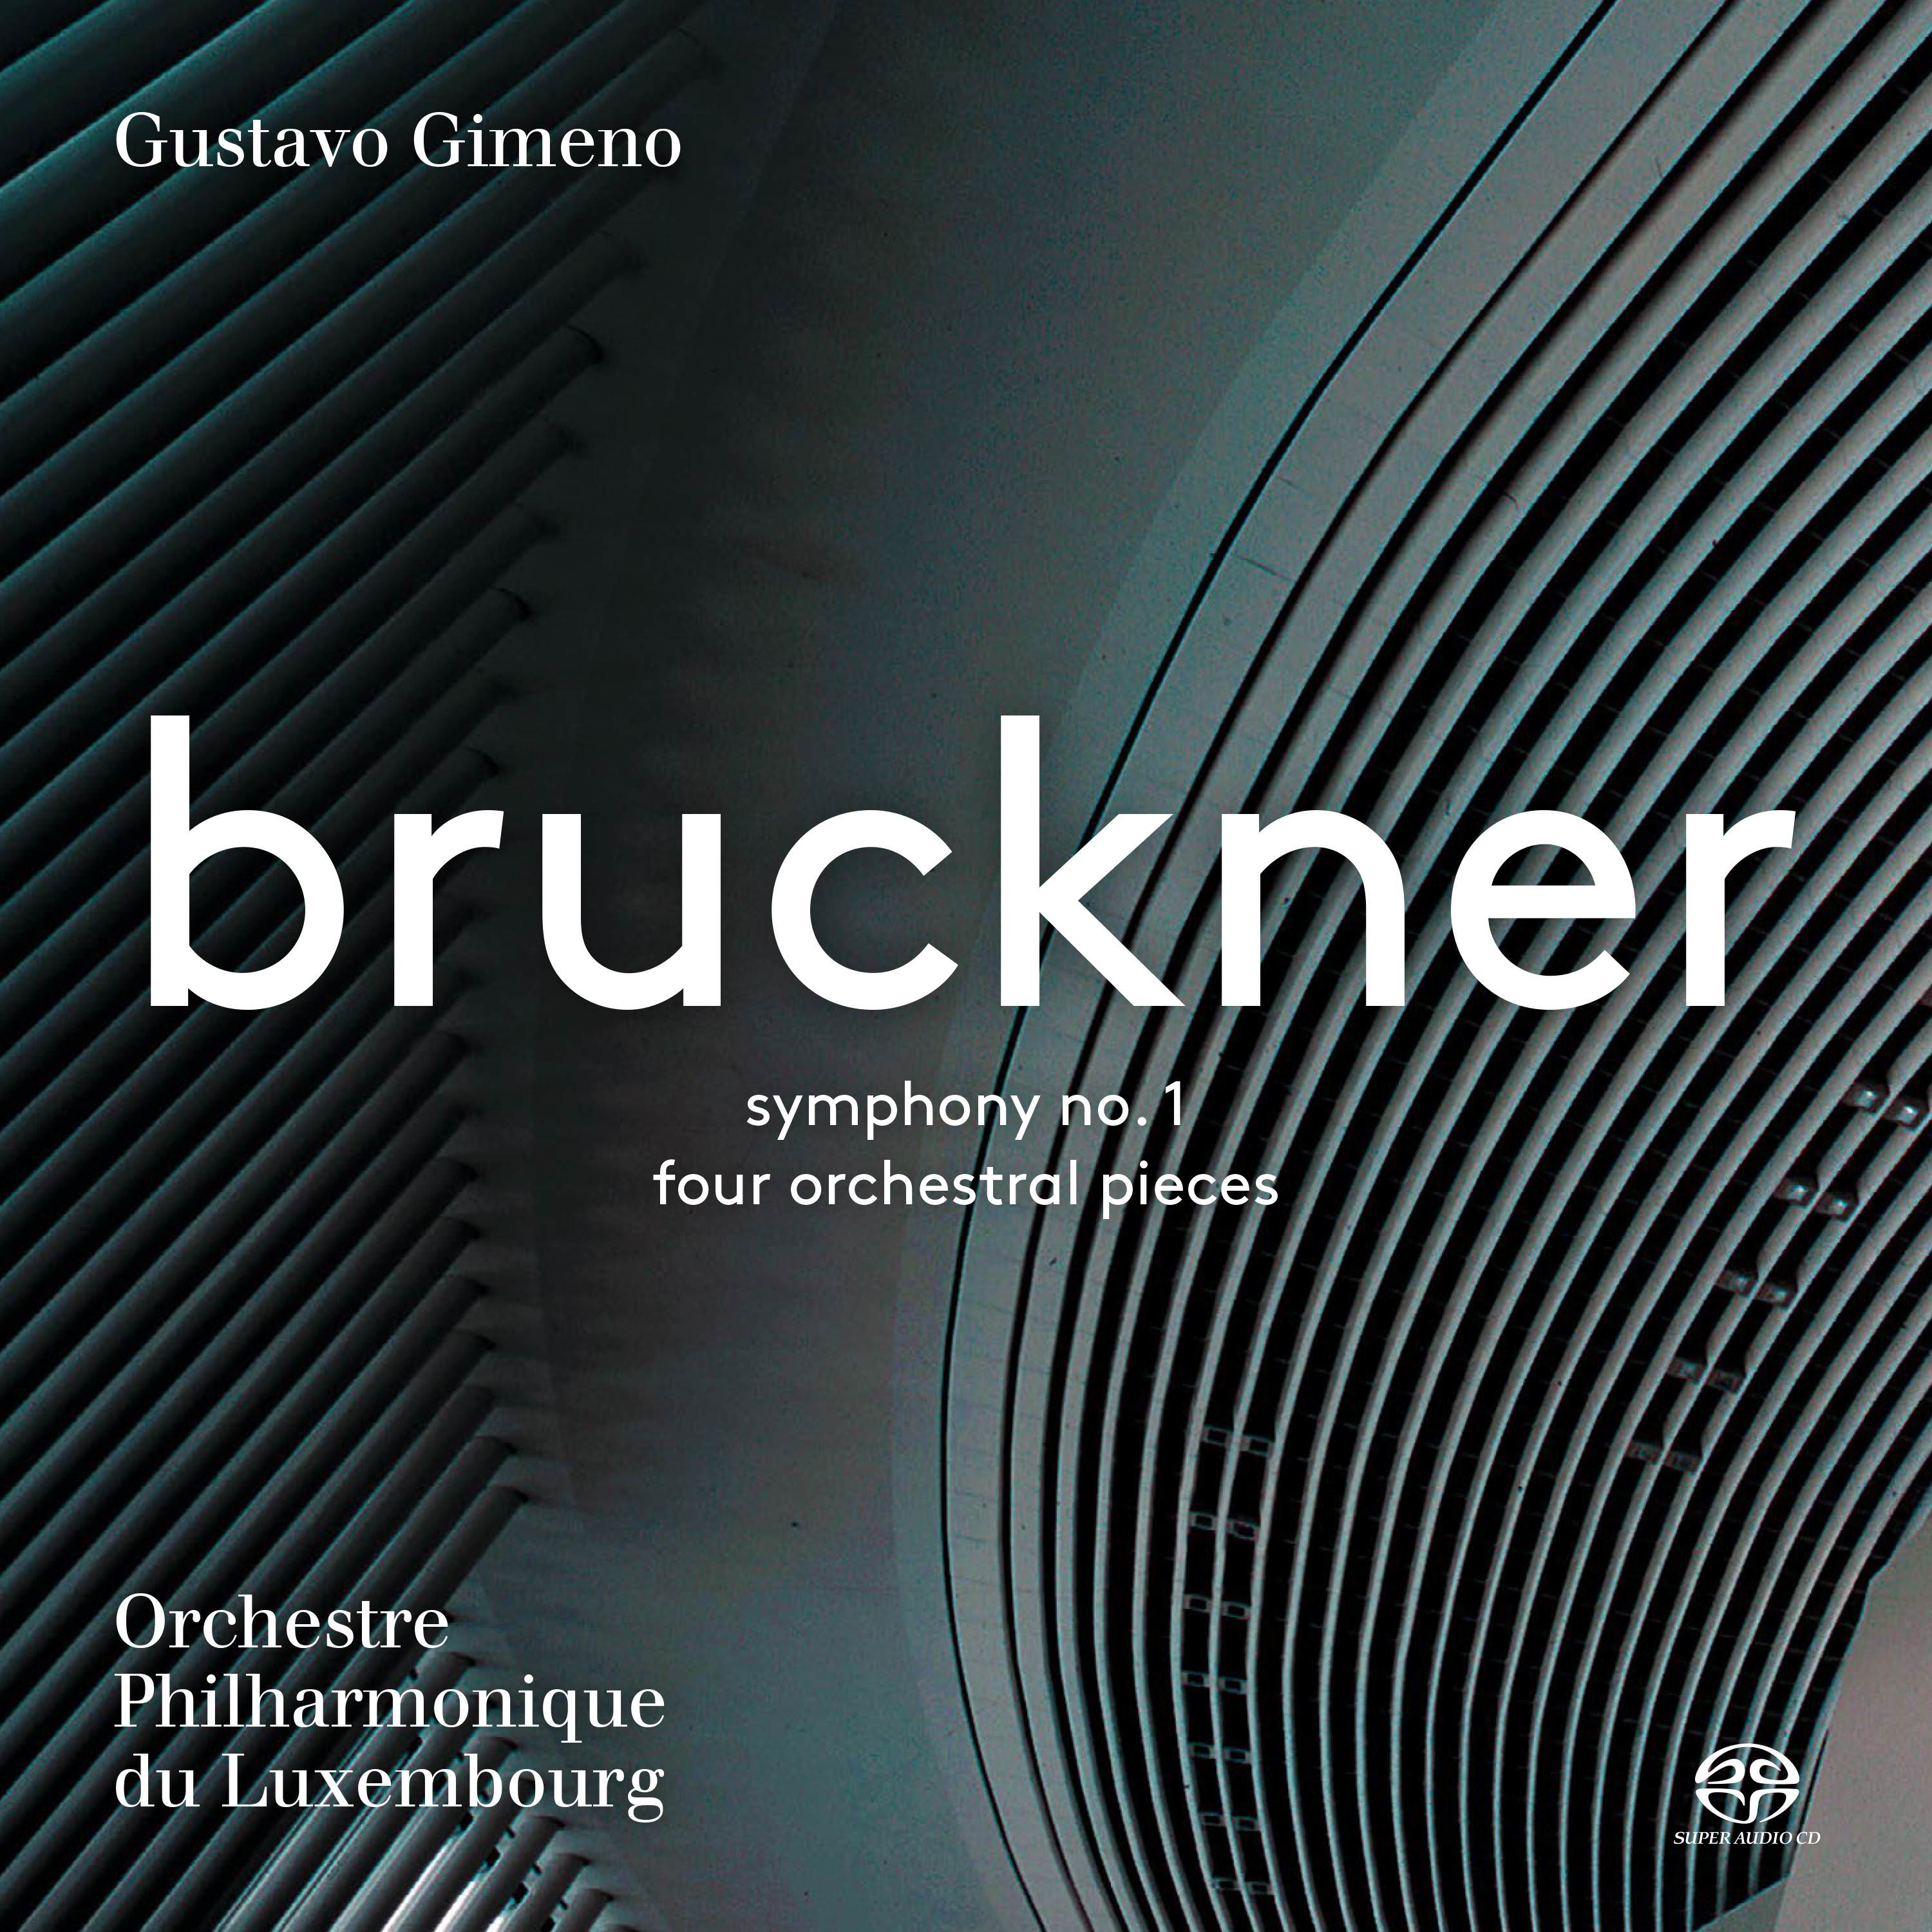 Orchestre Philharmonique du Luxembourg, Gustavo Gimeno - Bruckner: Symphony No. 1 (2017) [nativeDSDmusic DSF DSD64/2.82MHz]